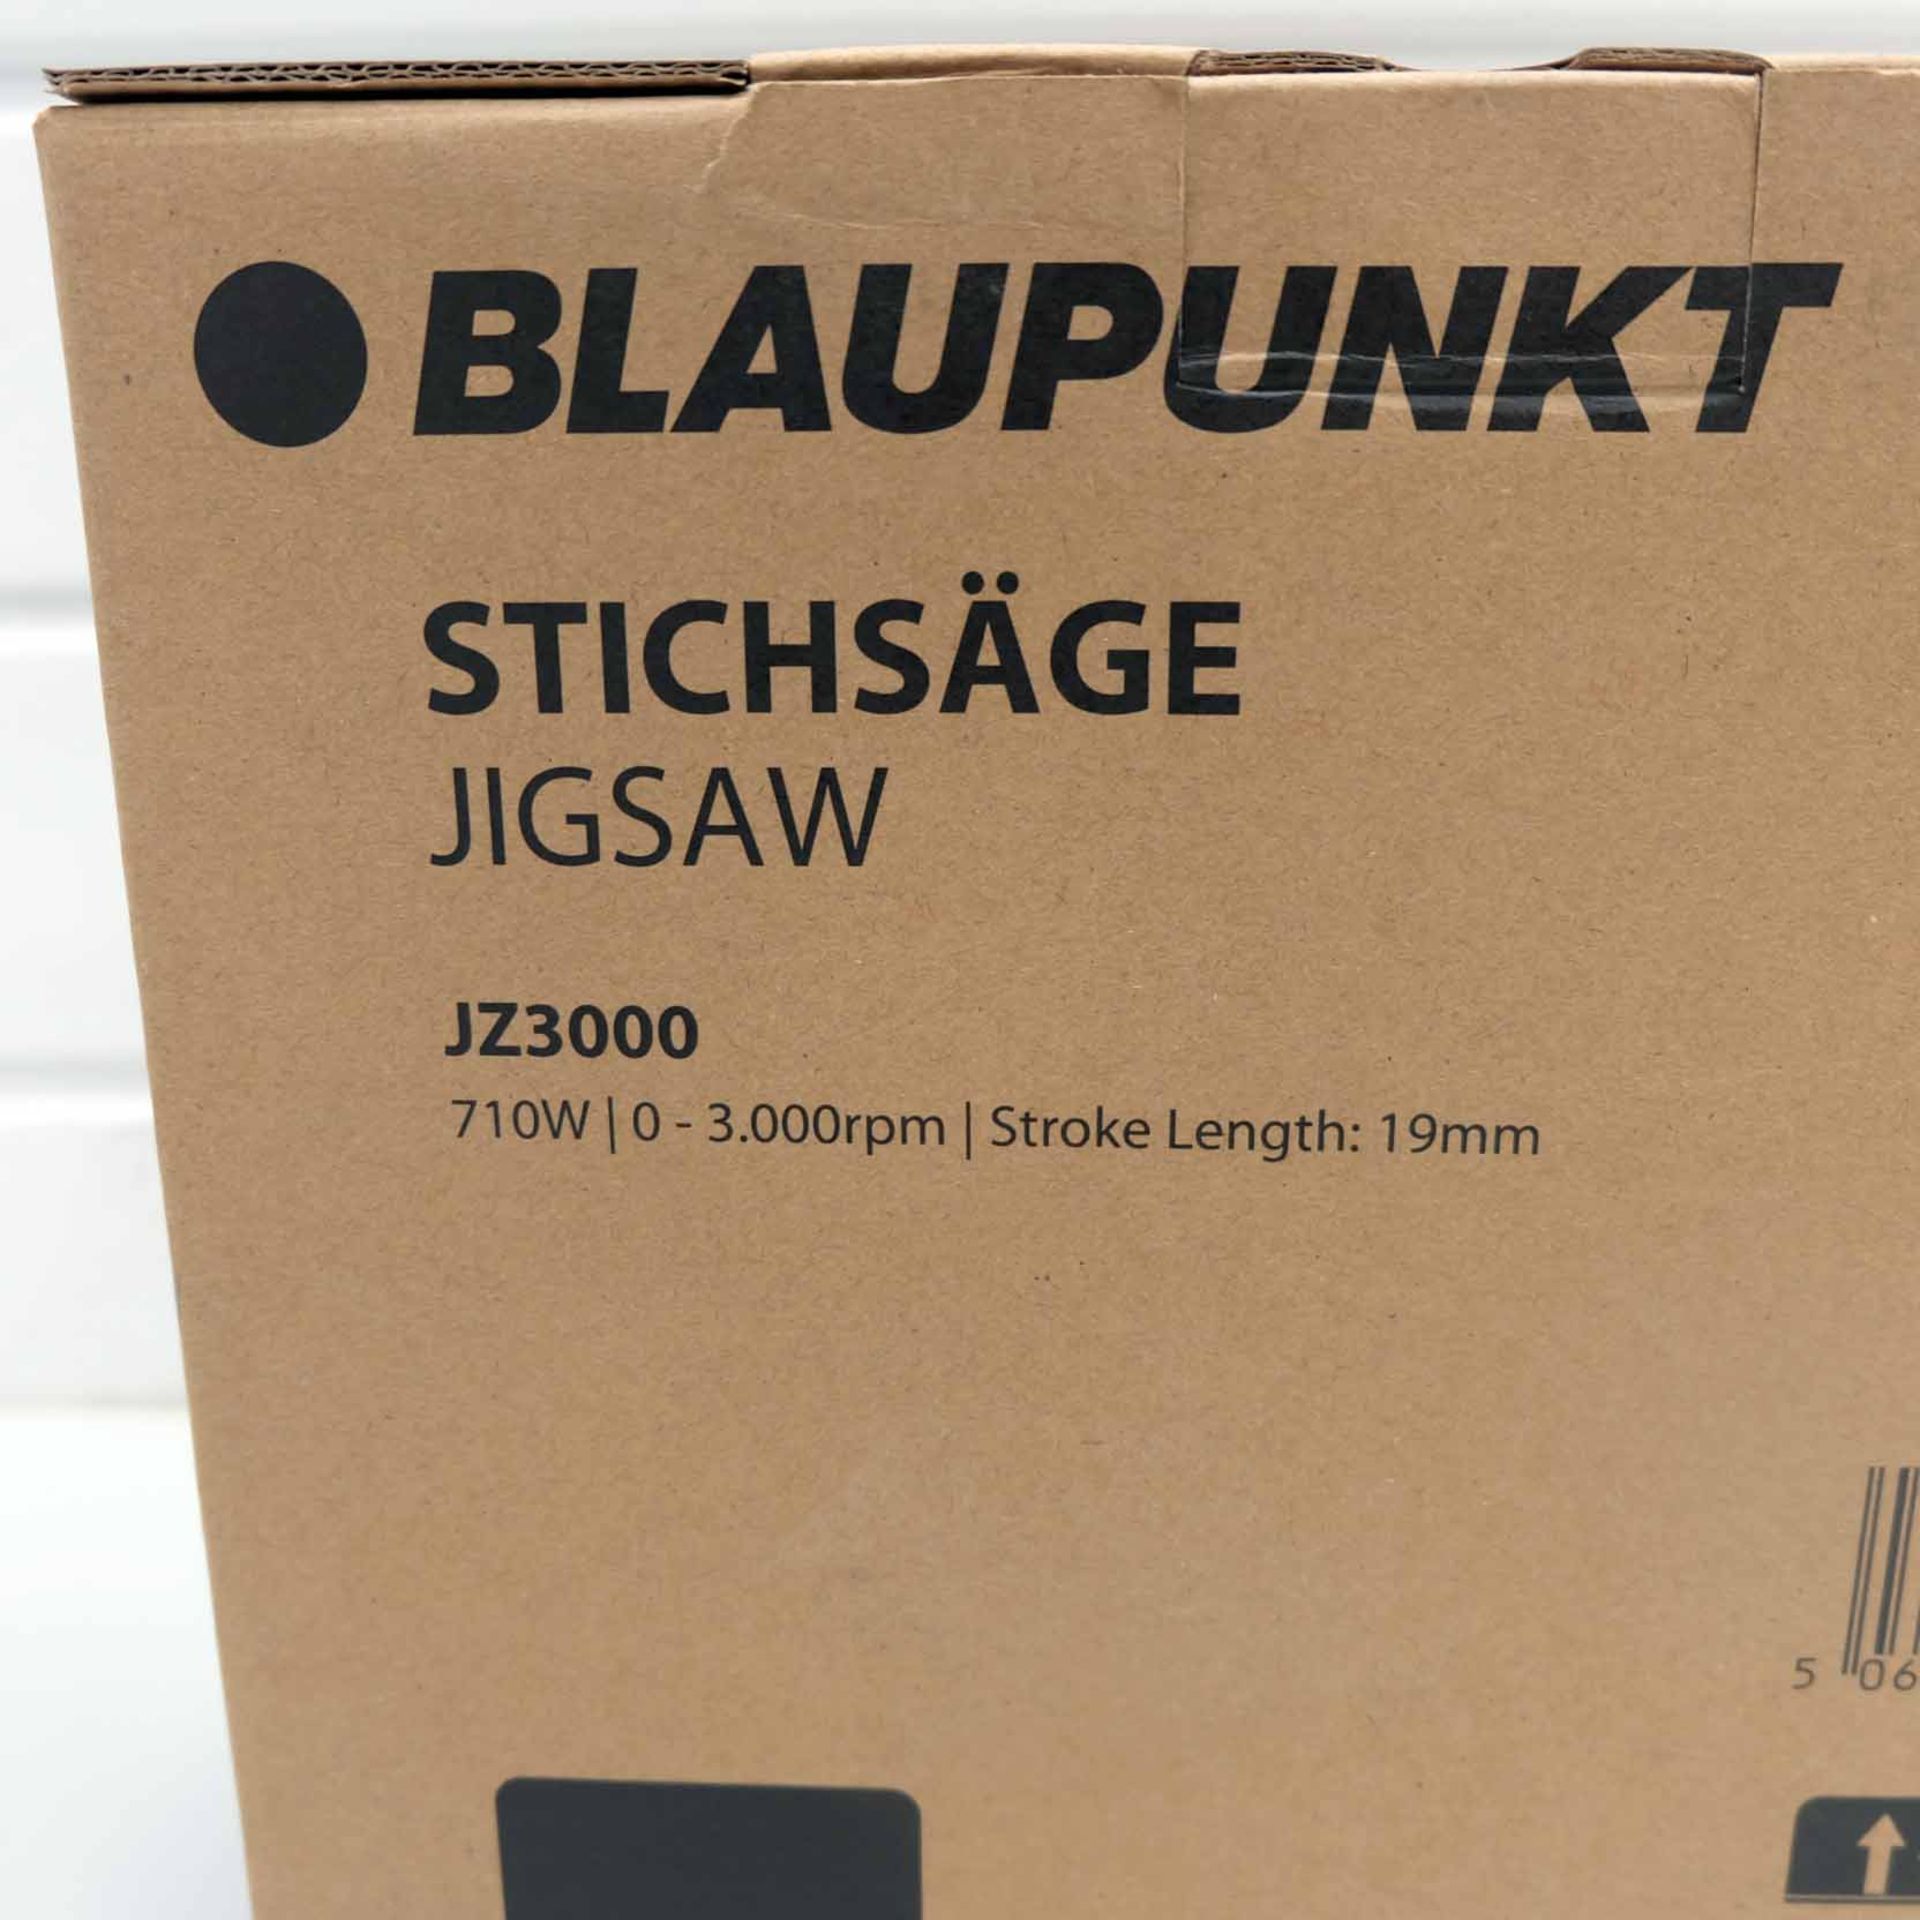 Blaupunkt STITAGE Jigsaw. Model JZ3000. 710W. 0-3000rpm. Stroke Length 19mm. - Image 6 of 8